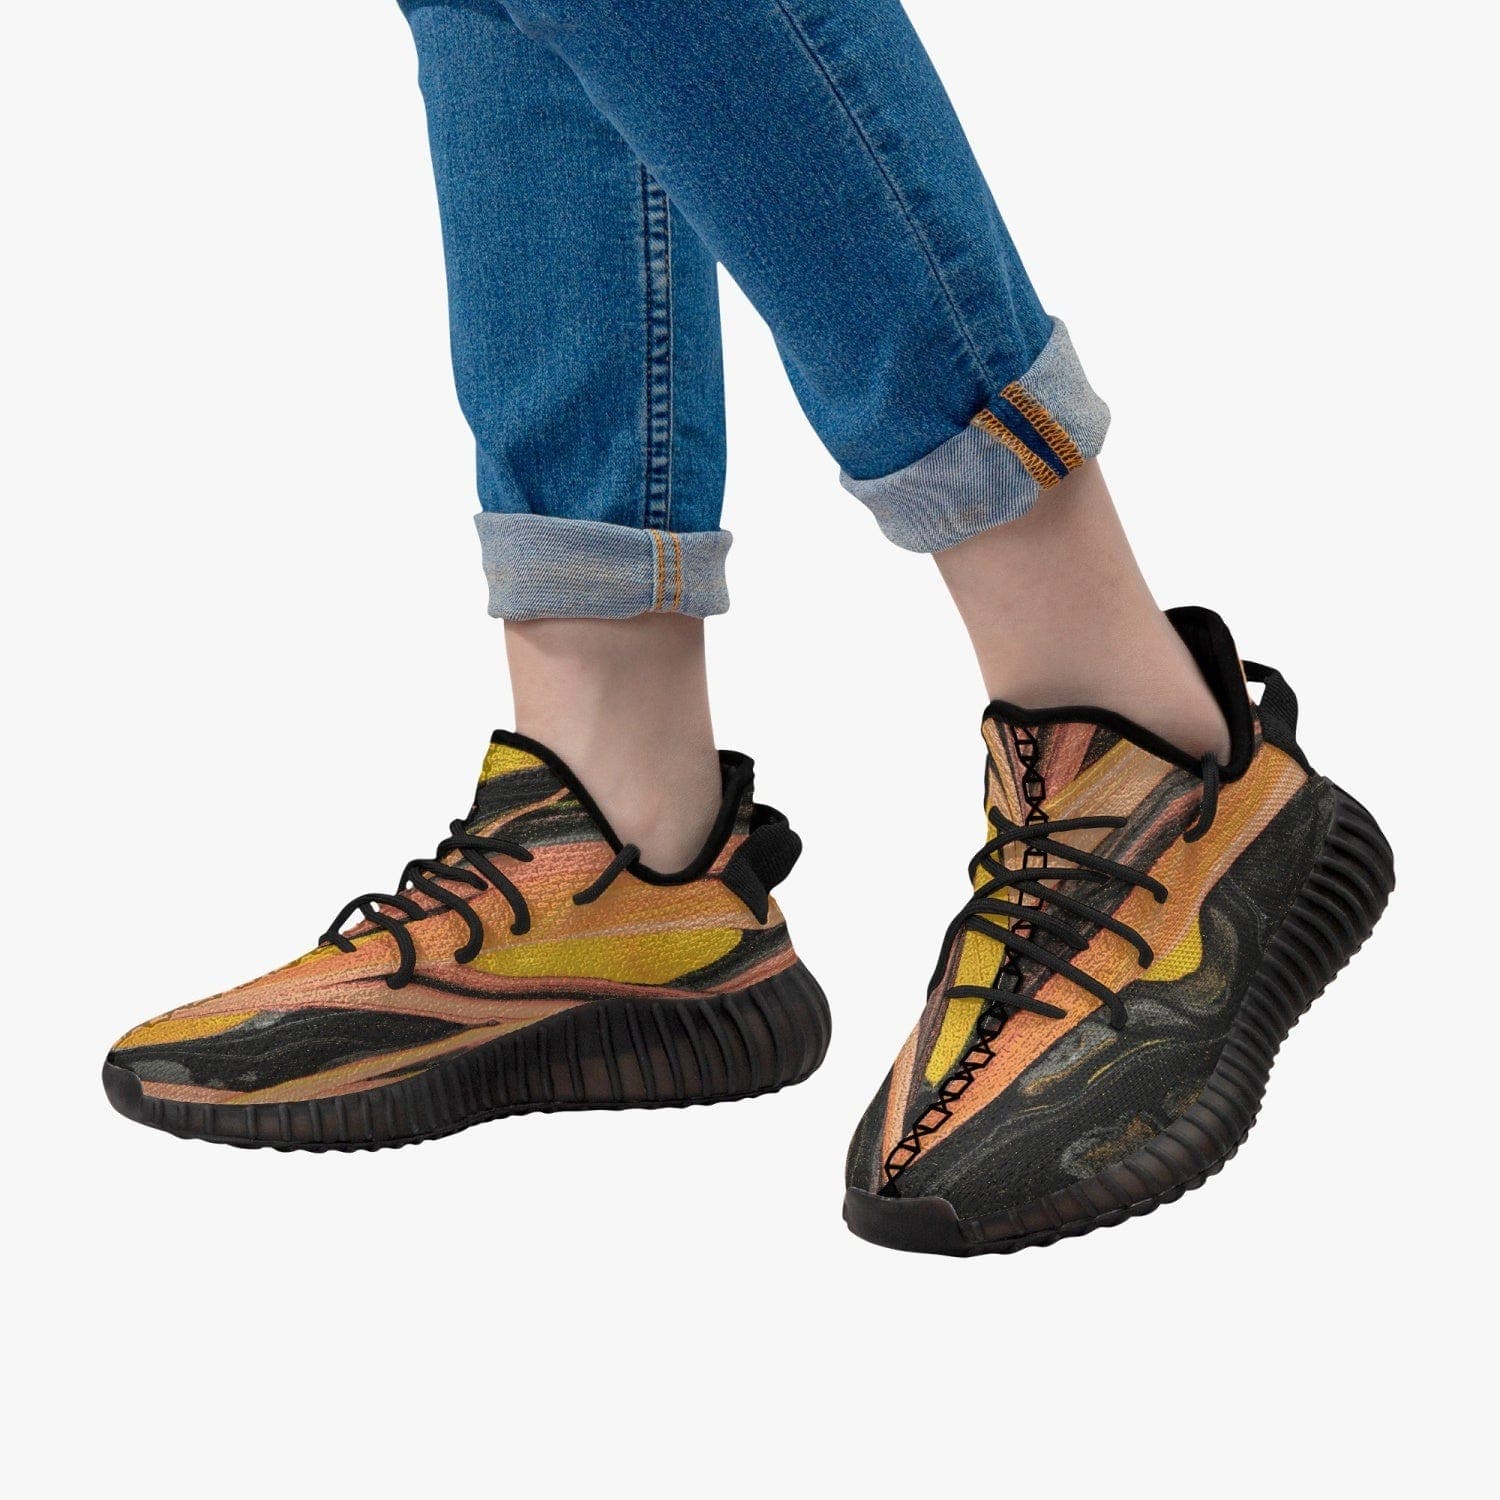 Orange Speed -  Adult Unisex Mesh Knit Sneakers, designed by Sensus Studio